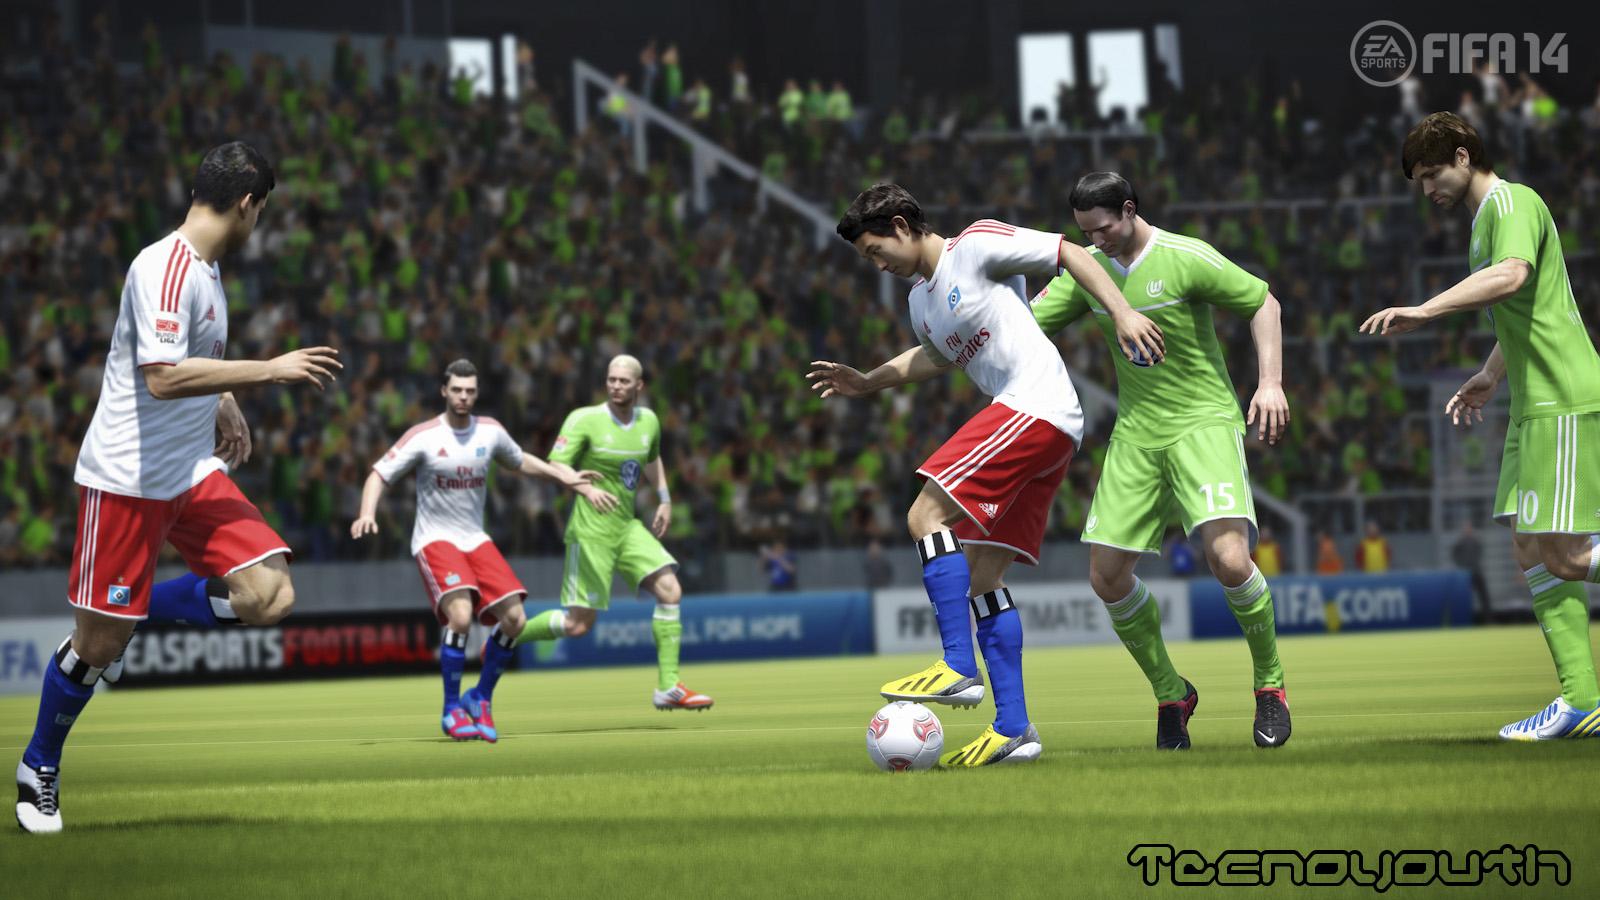 FIFA 14 Gameplay